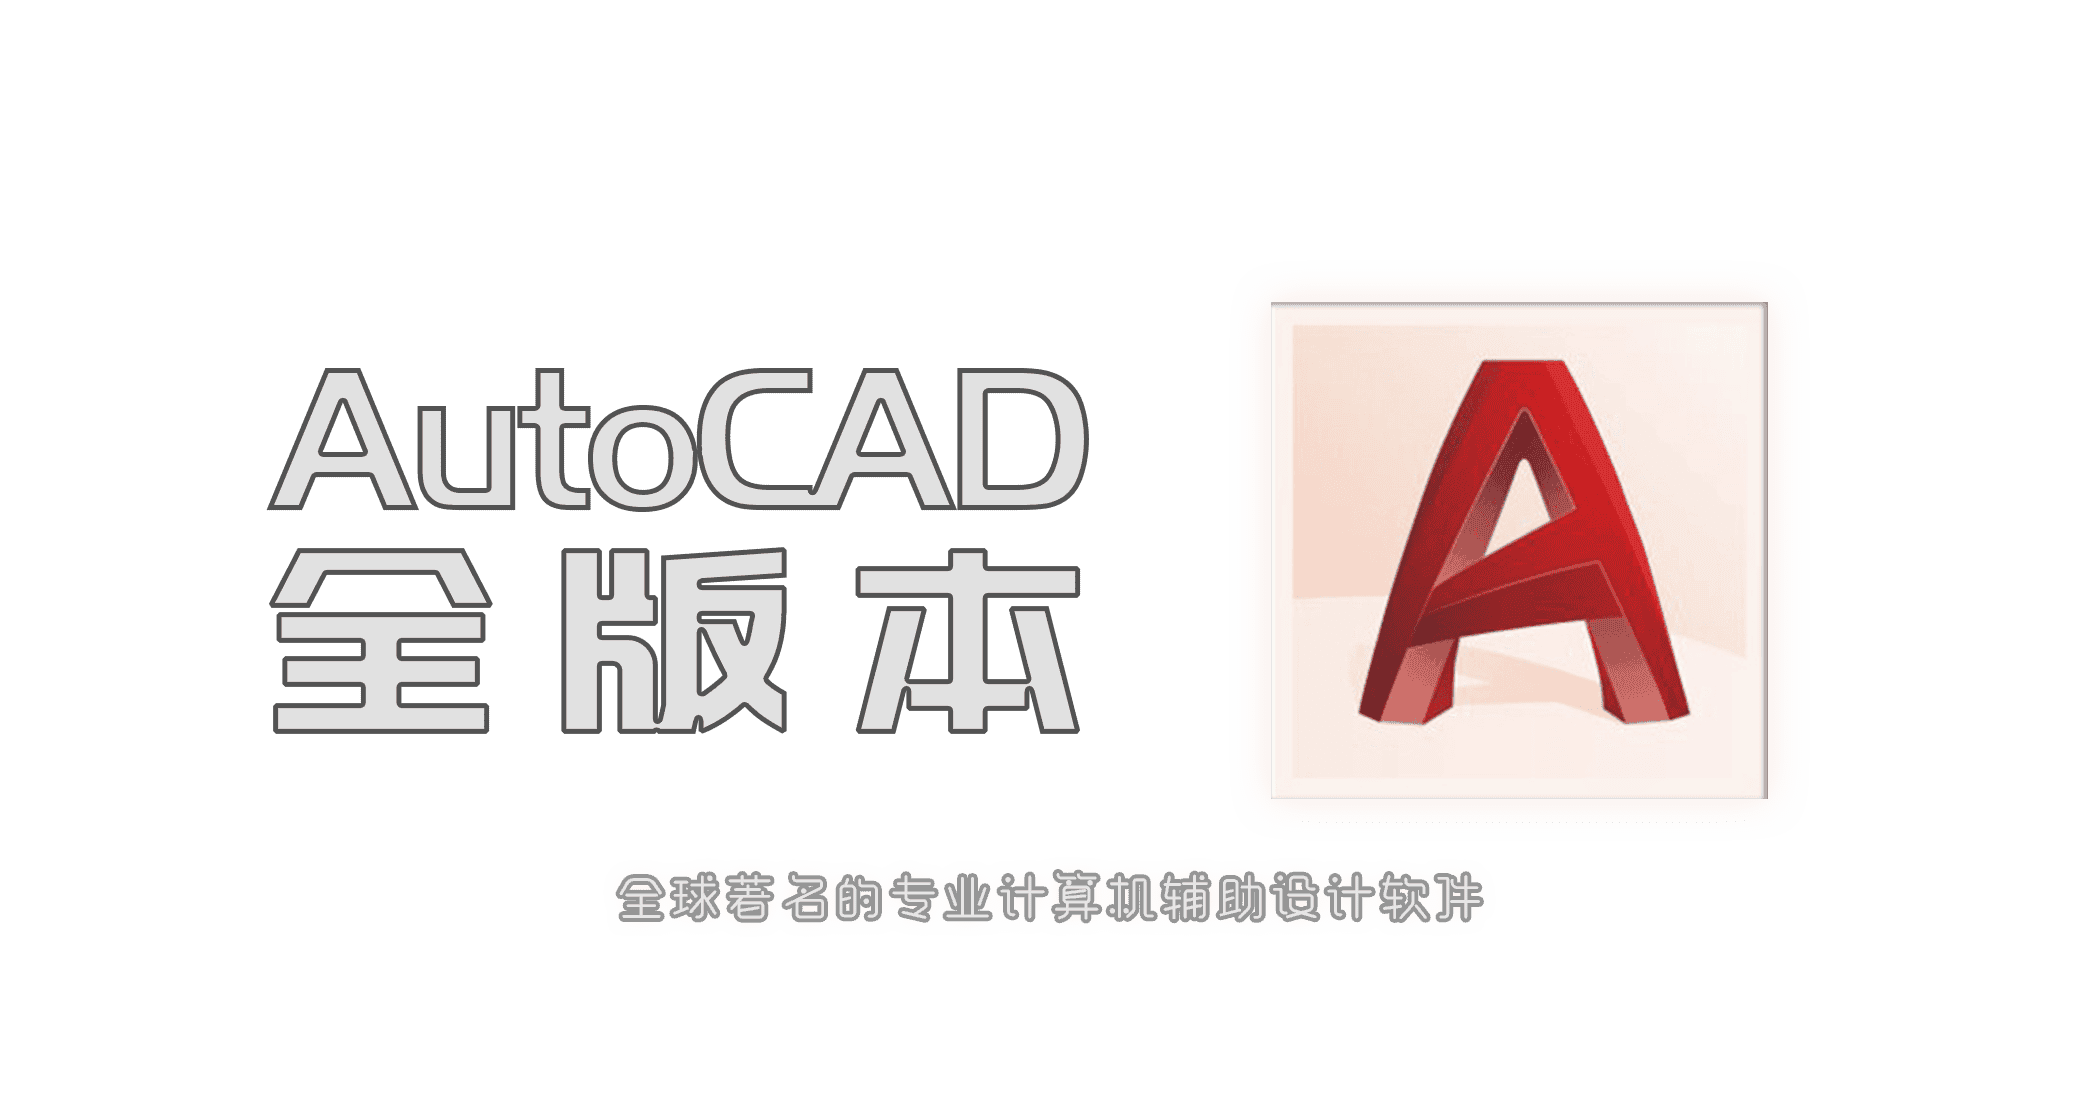 Autodesk AutoCAD 全版本-JACK小桔子的小屋